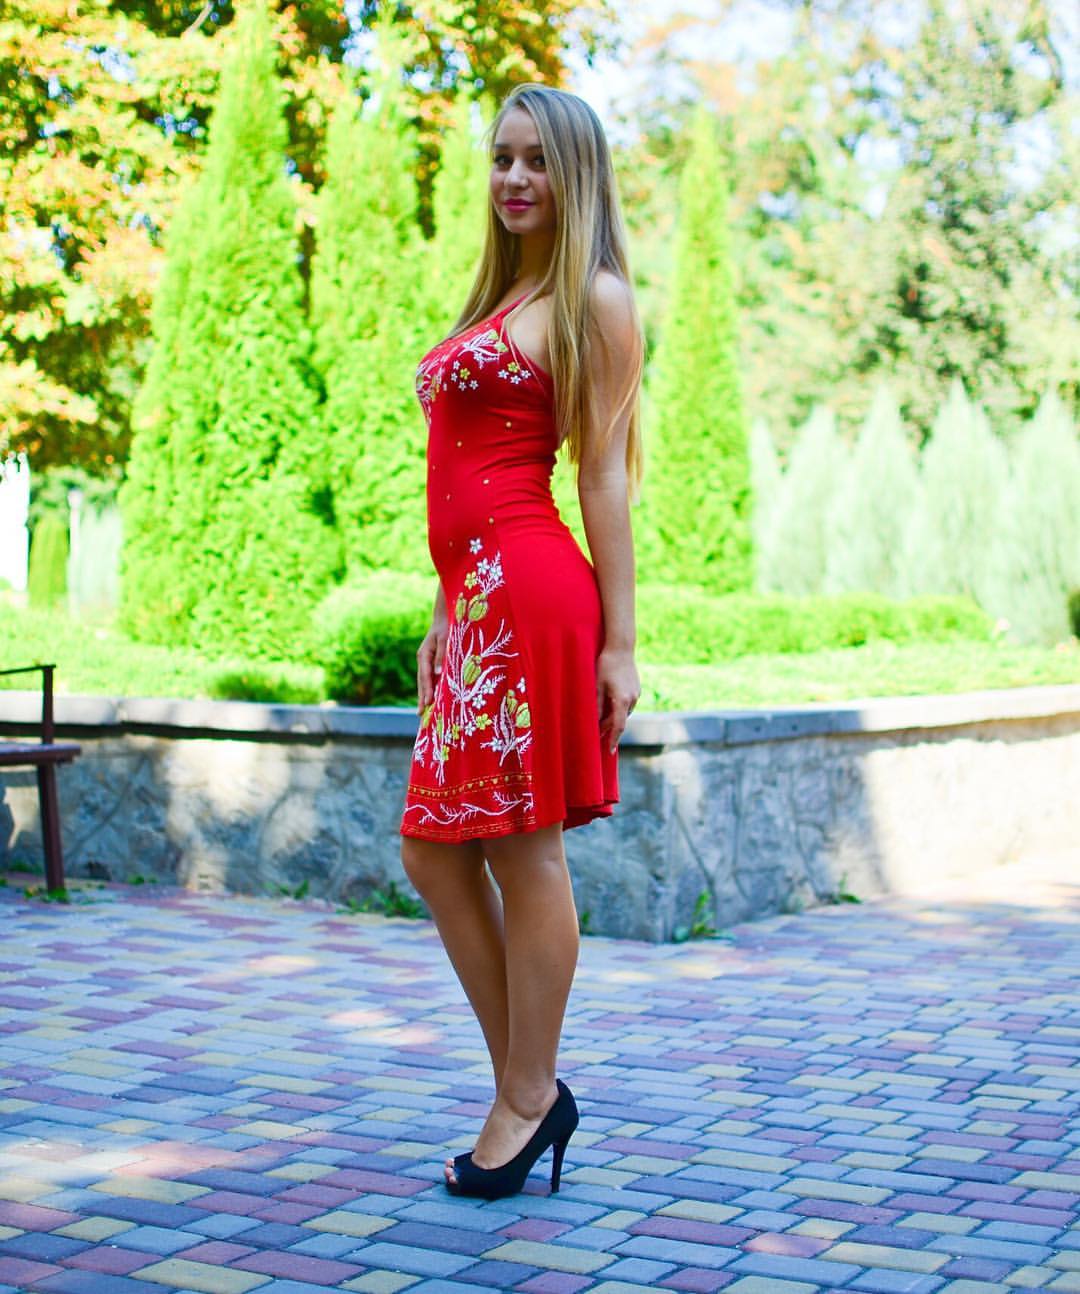 Meet Irina Evdokimova | Fitness Beauty | Ukrainian Girls | Russian Women